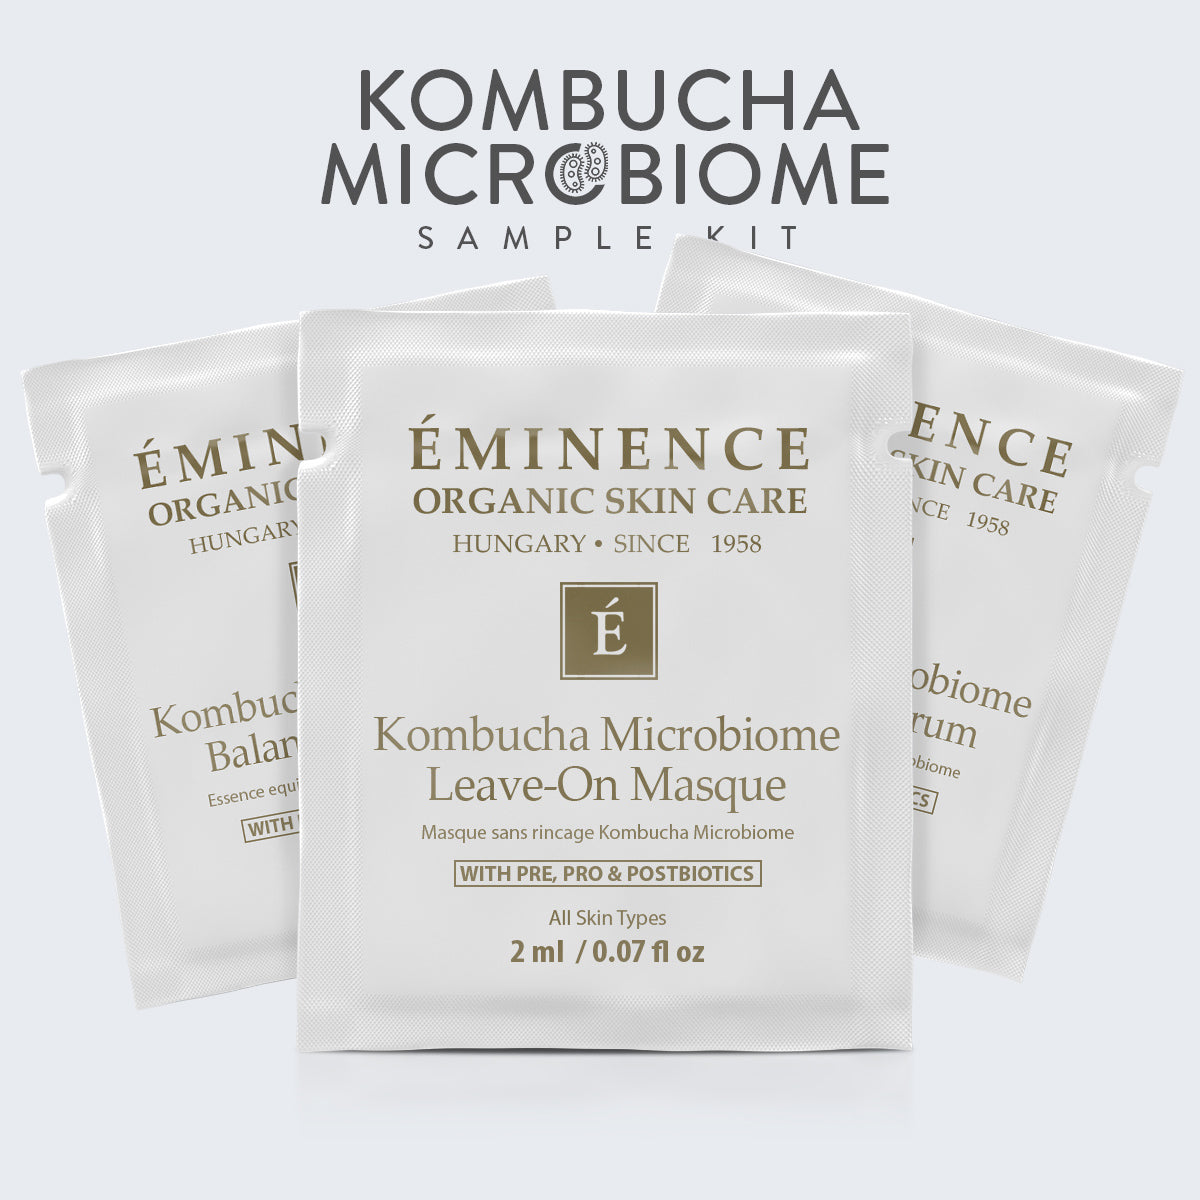 Eminence Organics Kombucha Microbiome Sample Kit